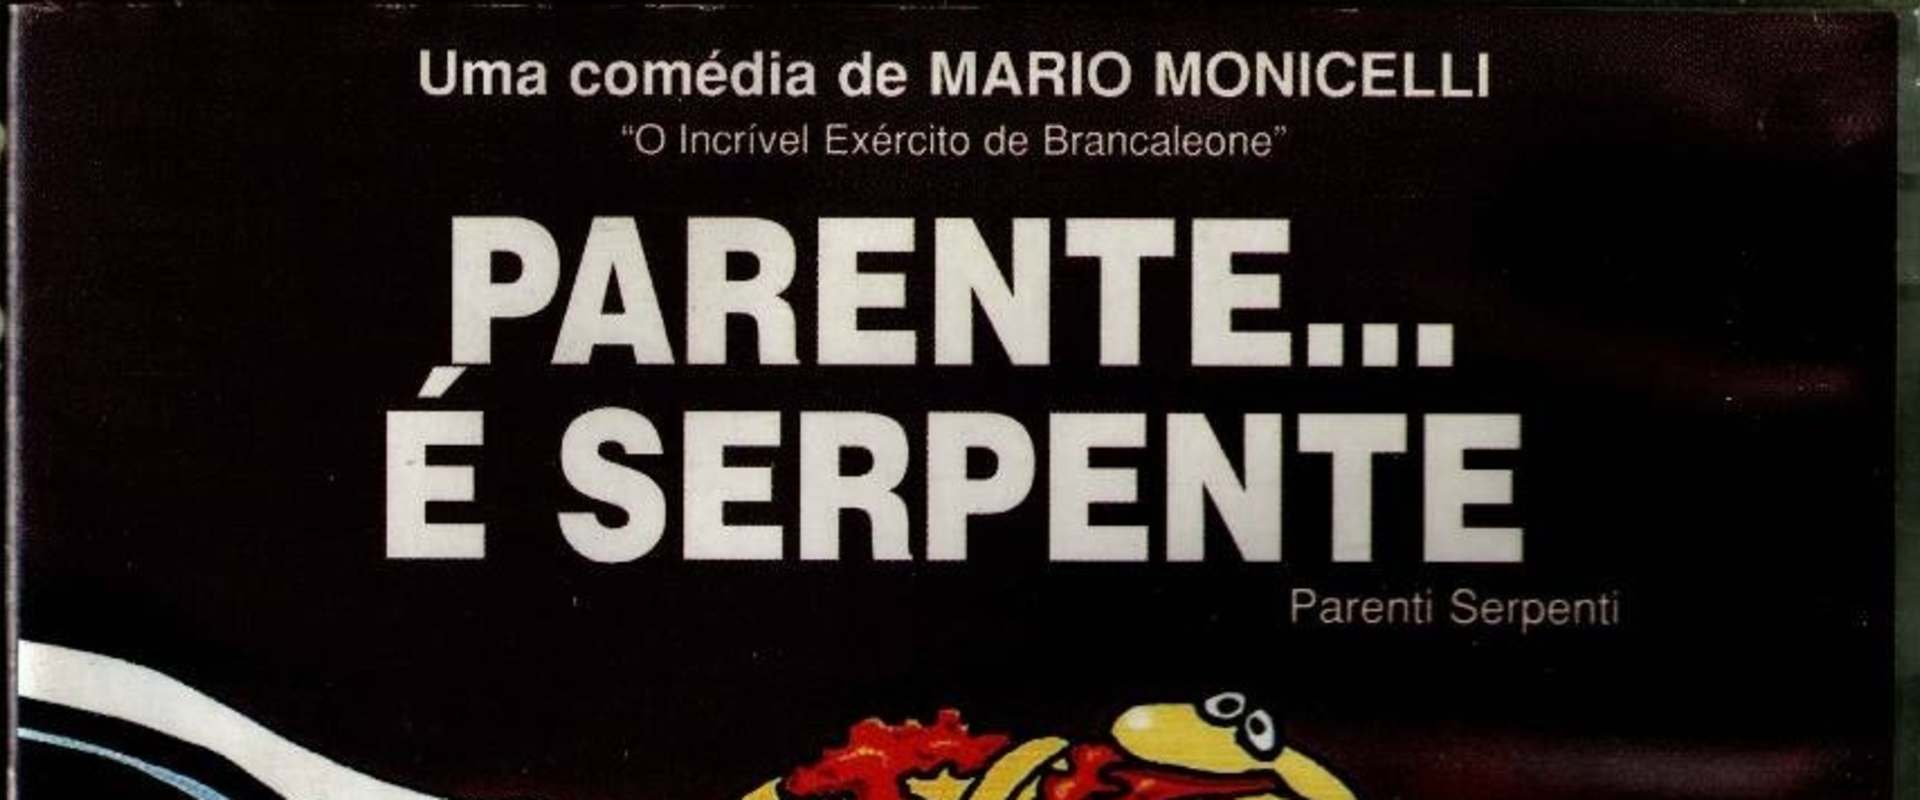 Parente É Serpente - Ed. Versátil ( Parenti Serpenti ) Mário Monicelli